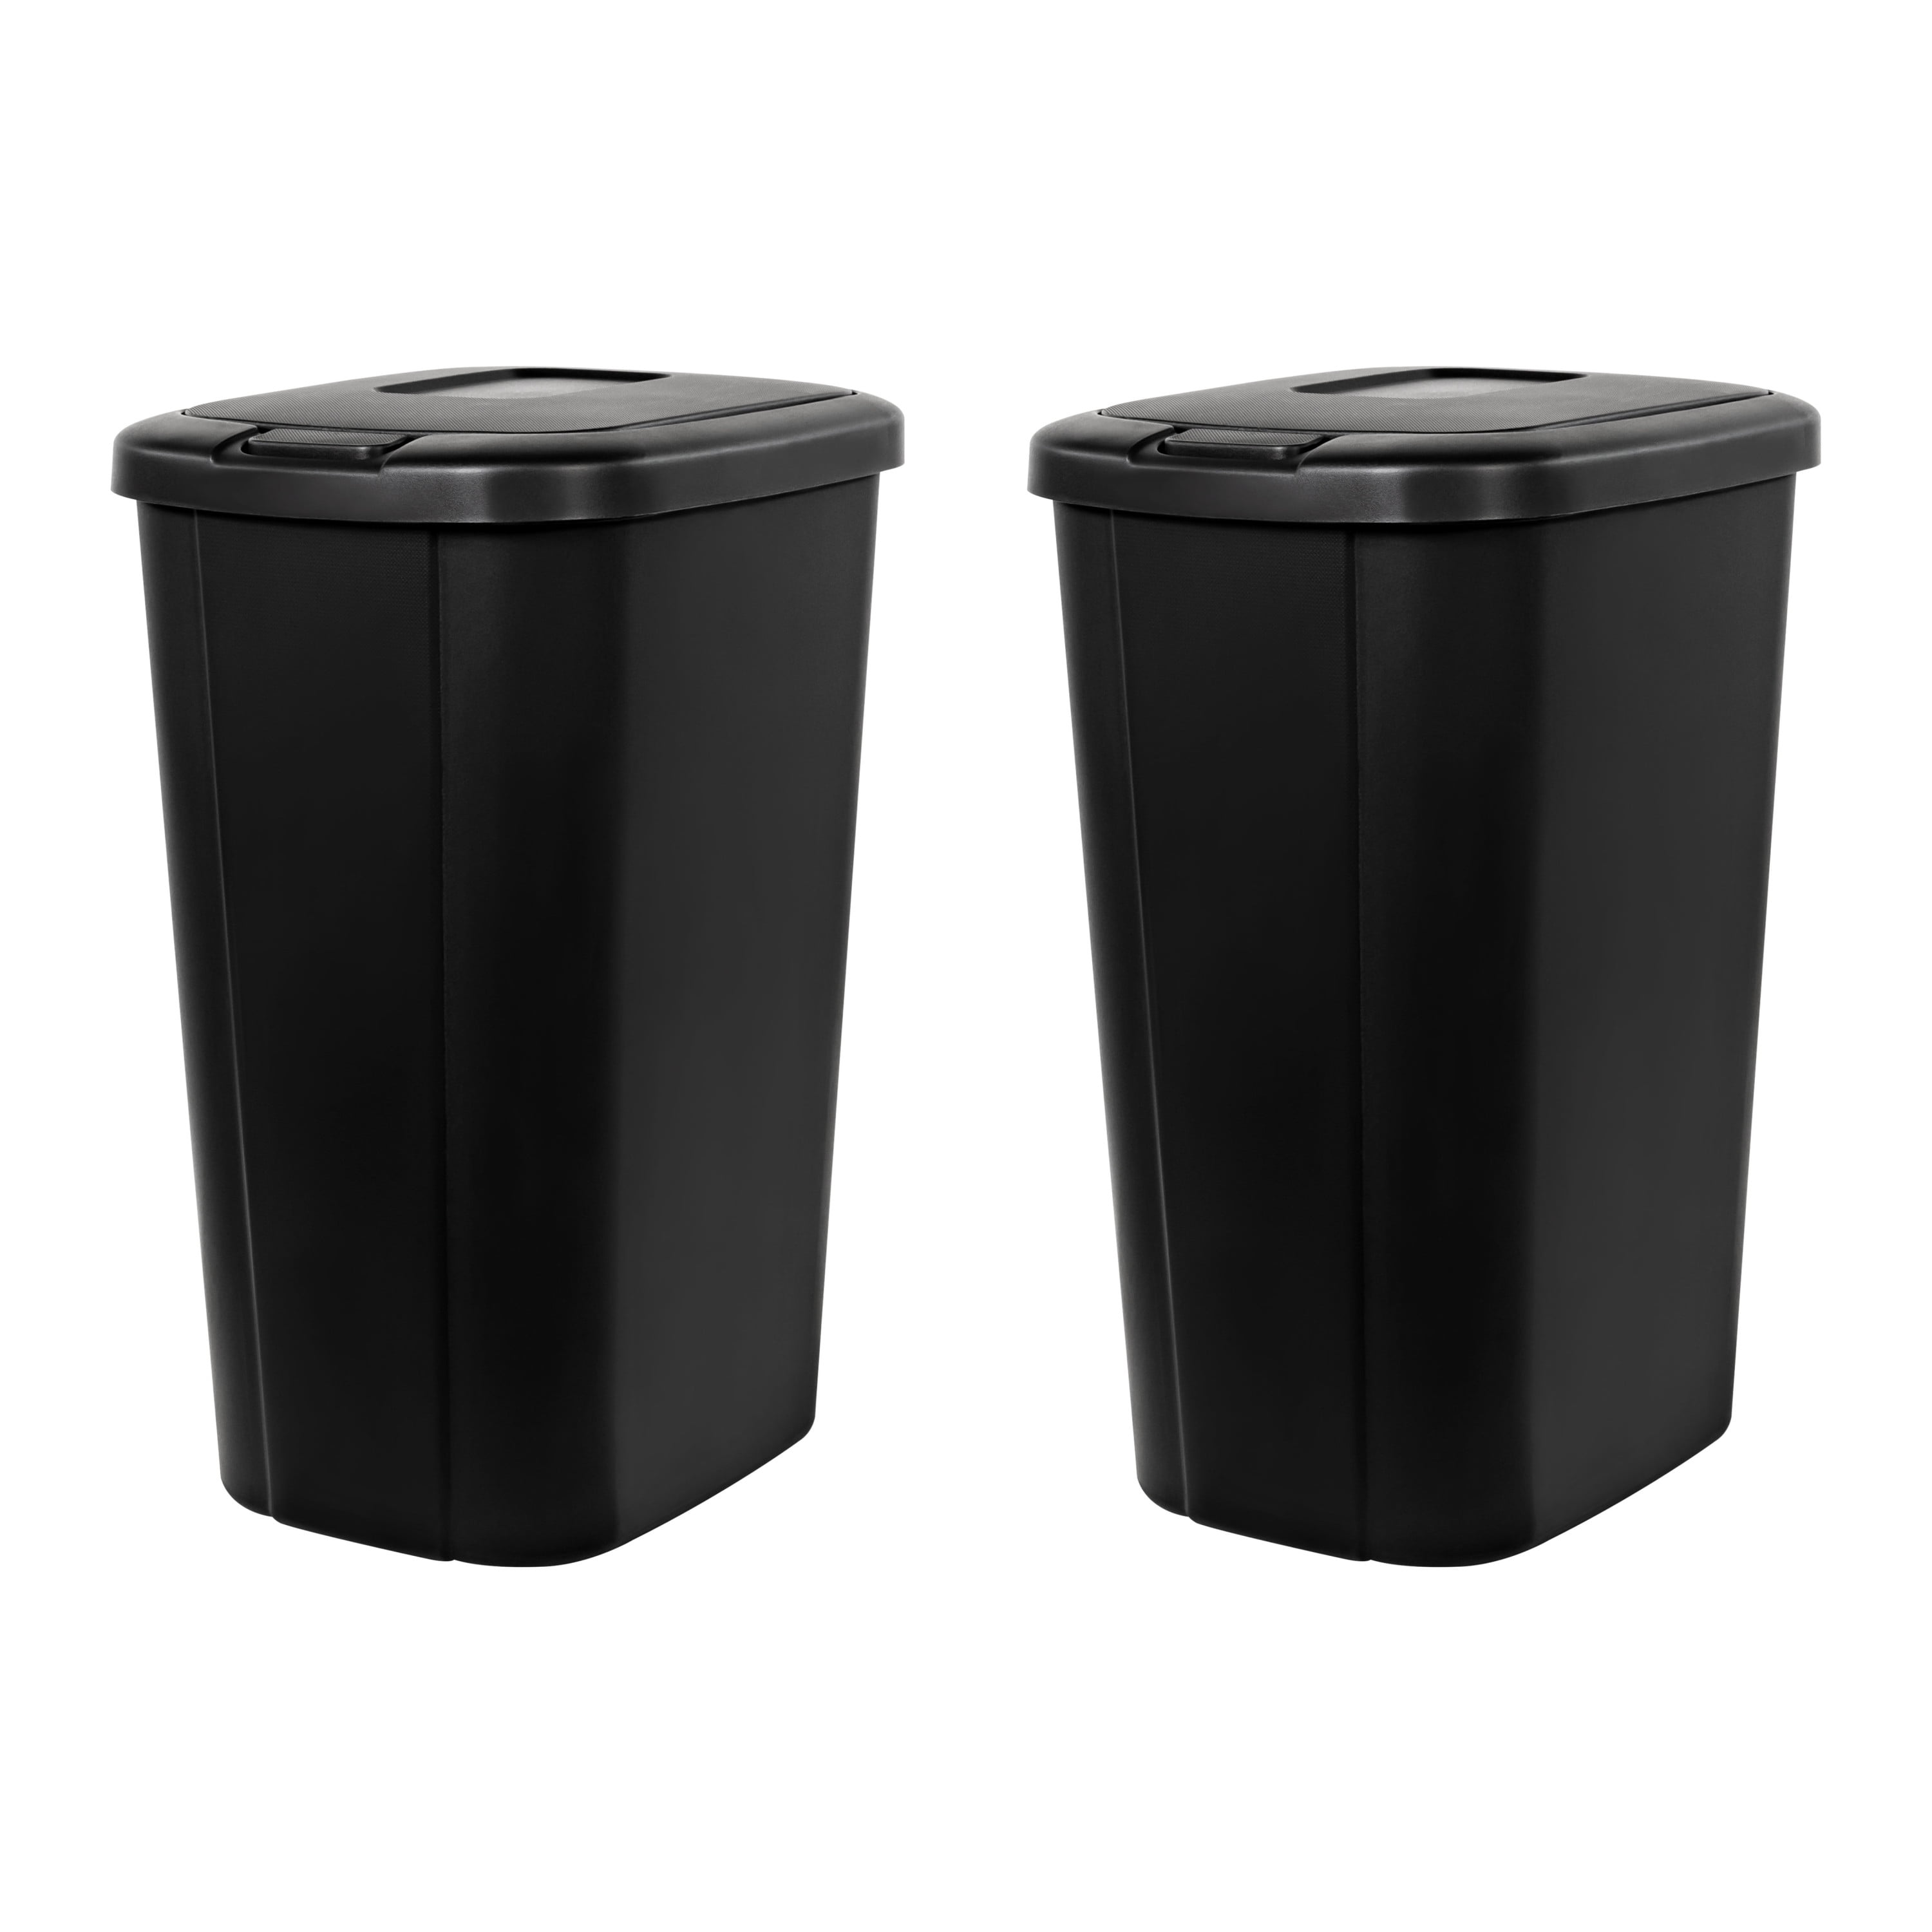 Large Plastic 85 Litre Dustbin Recycle Bin with Locking Lid Set of 2 Plastic Bin